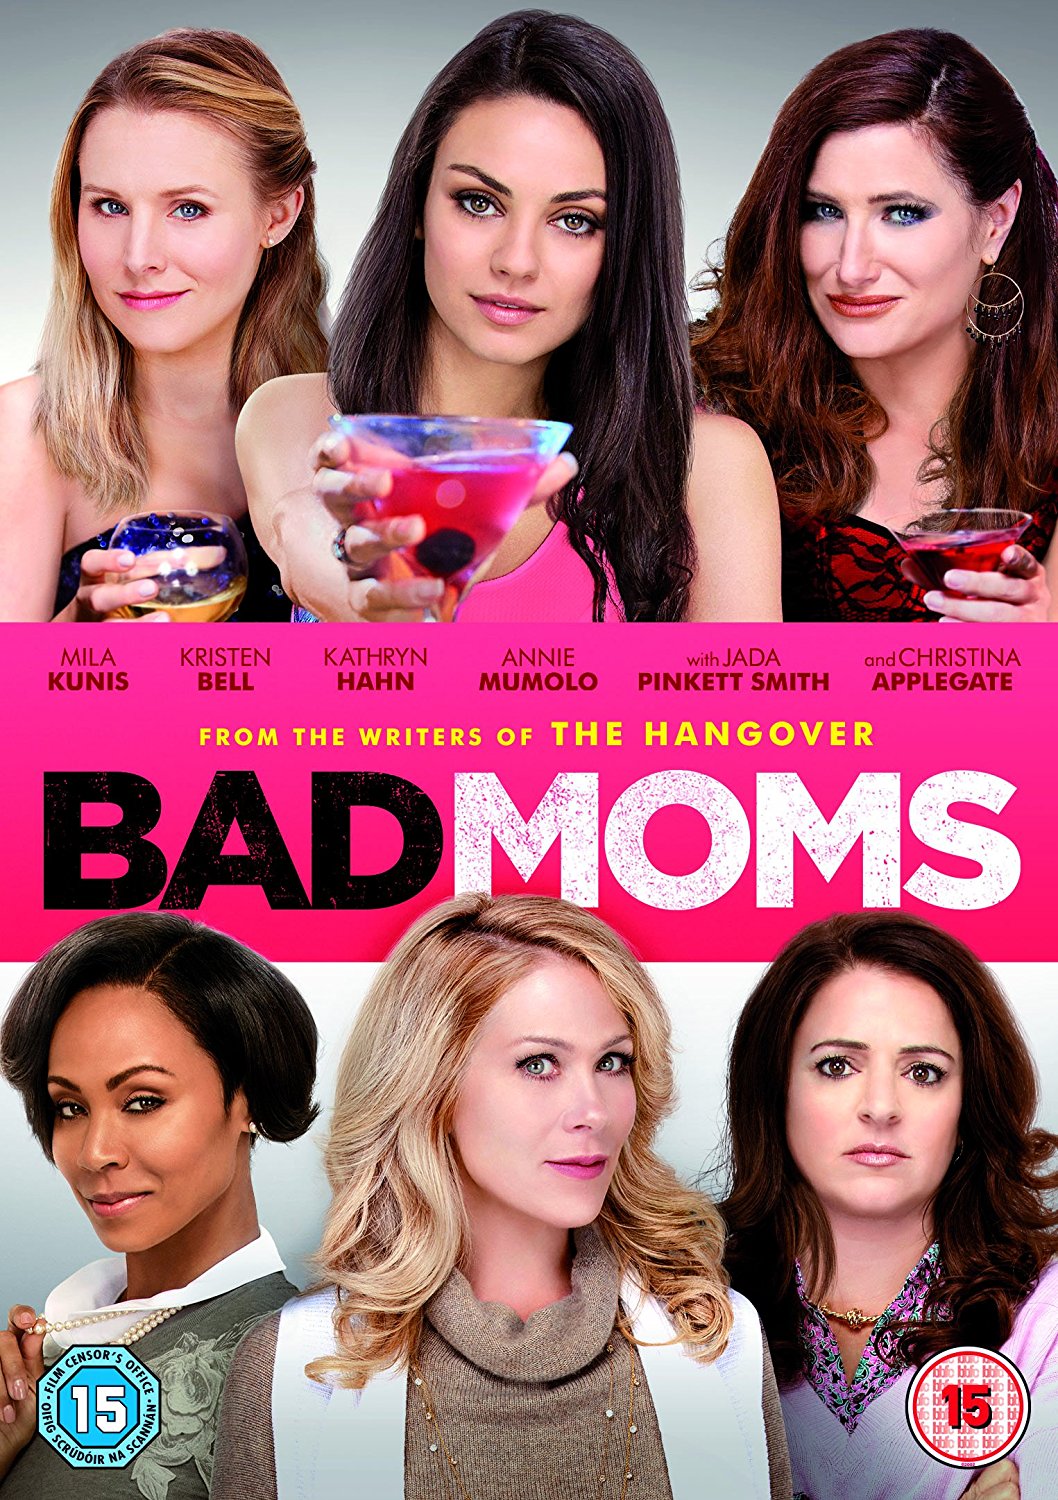 Bad Moms (DVD)